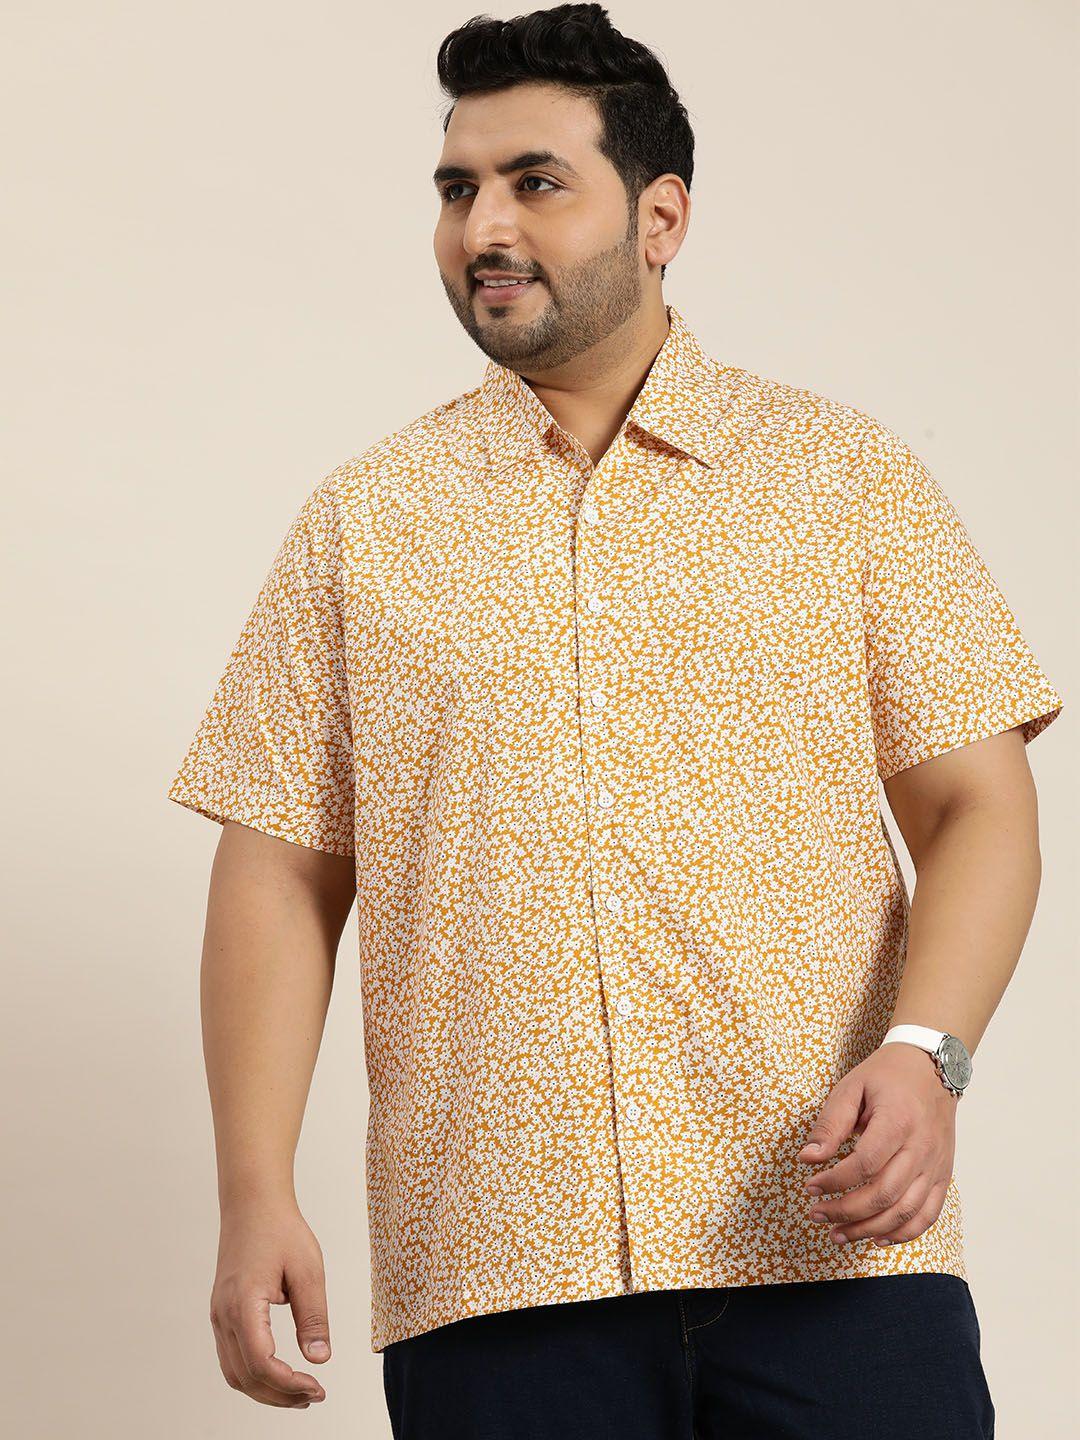 sztori men plus size original floral printed casual shirt